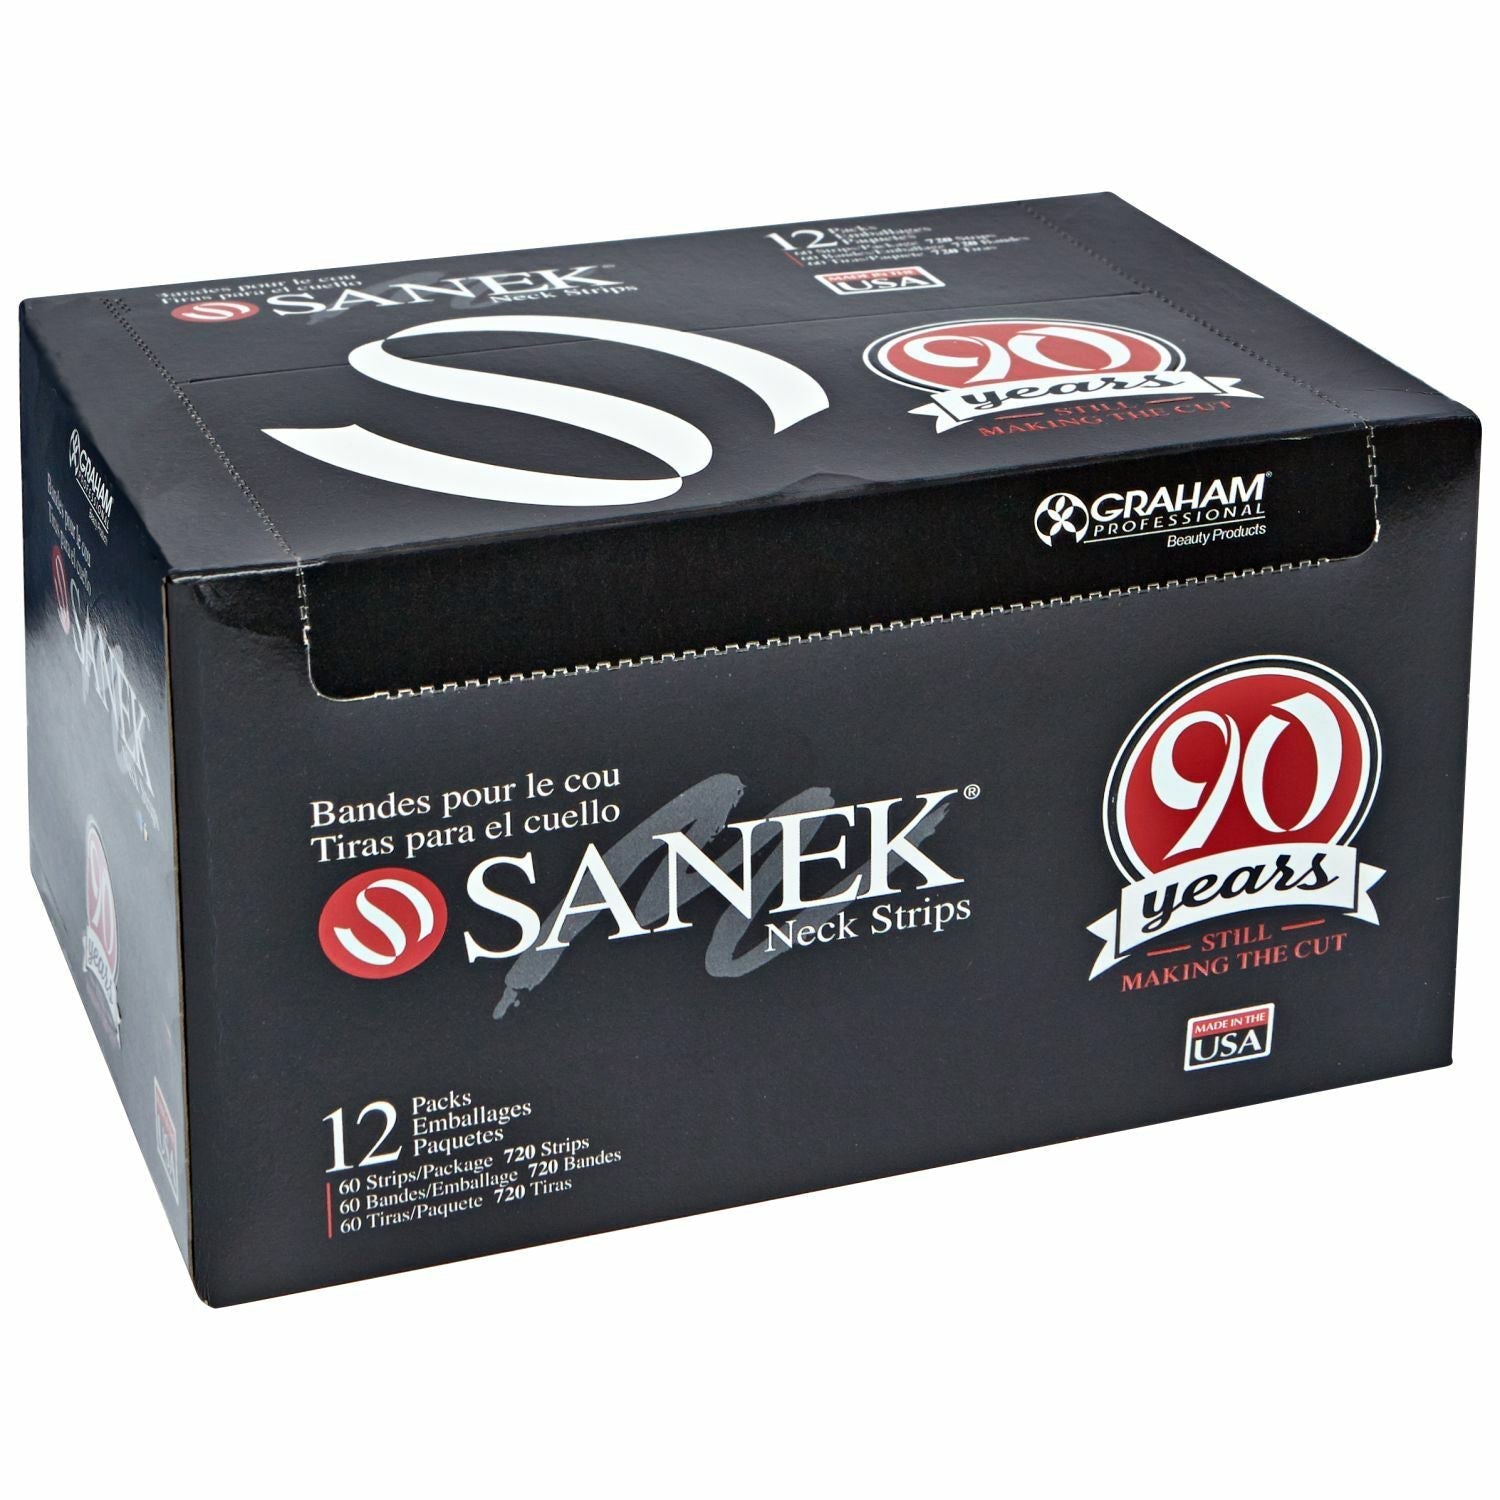 Sanek Neck Strips | 12 Packs | GRAHAM BEAUTY Towels GRAHAM BEAUTY 